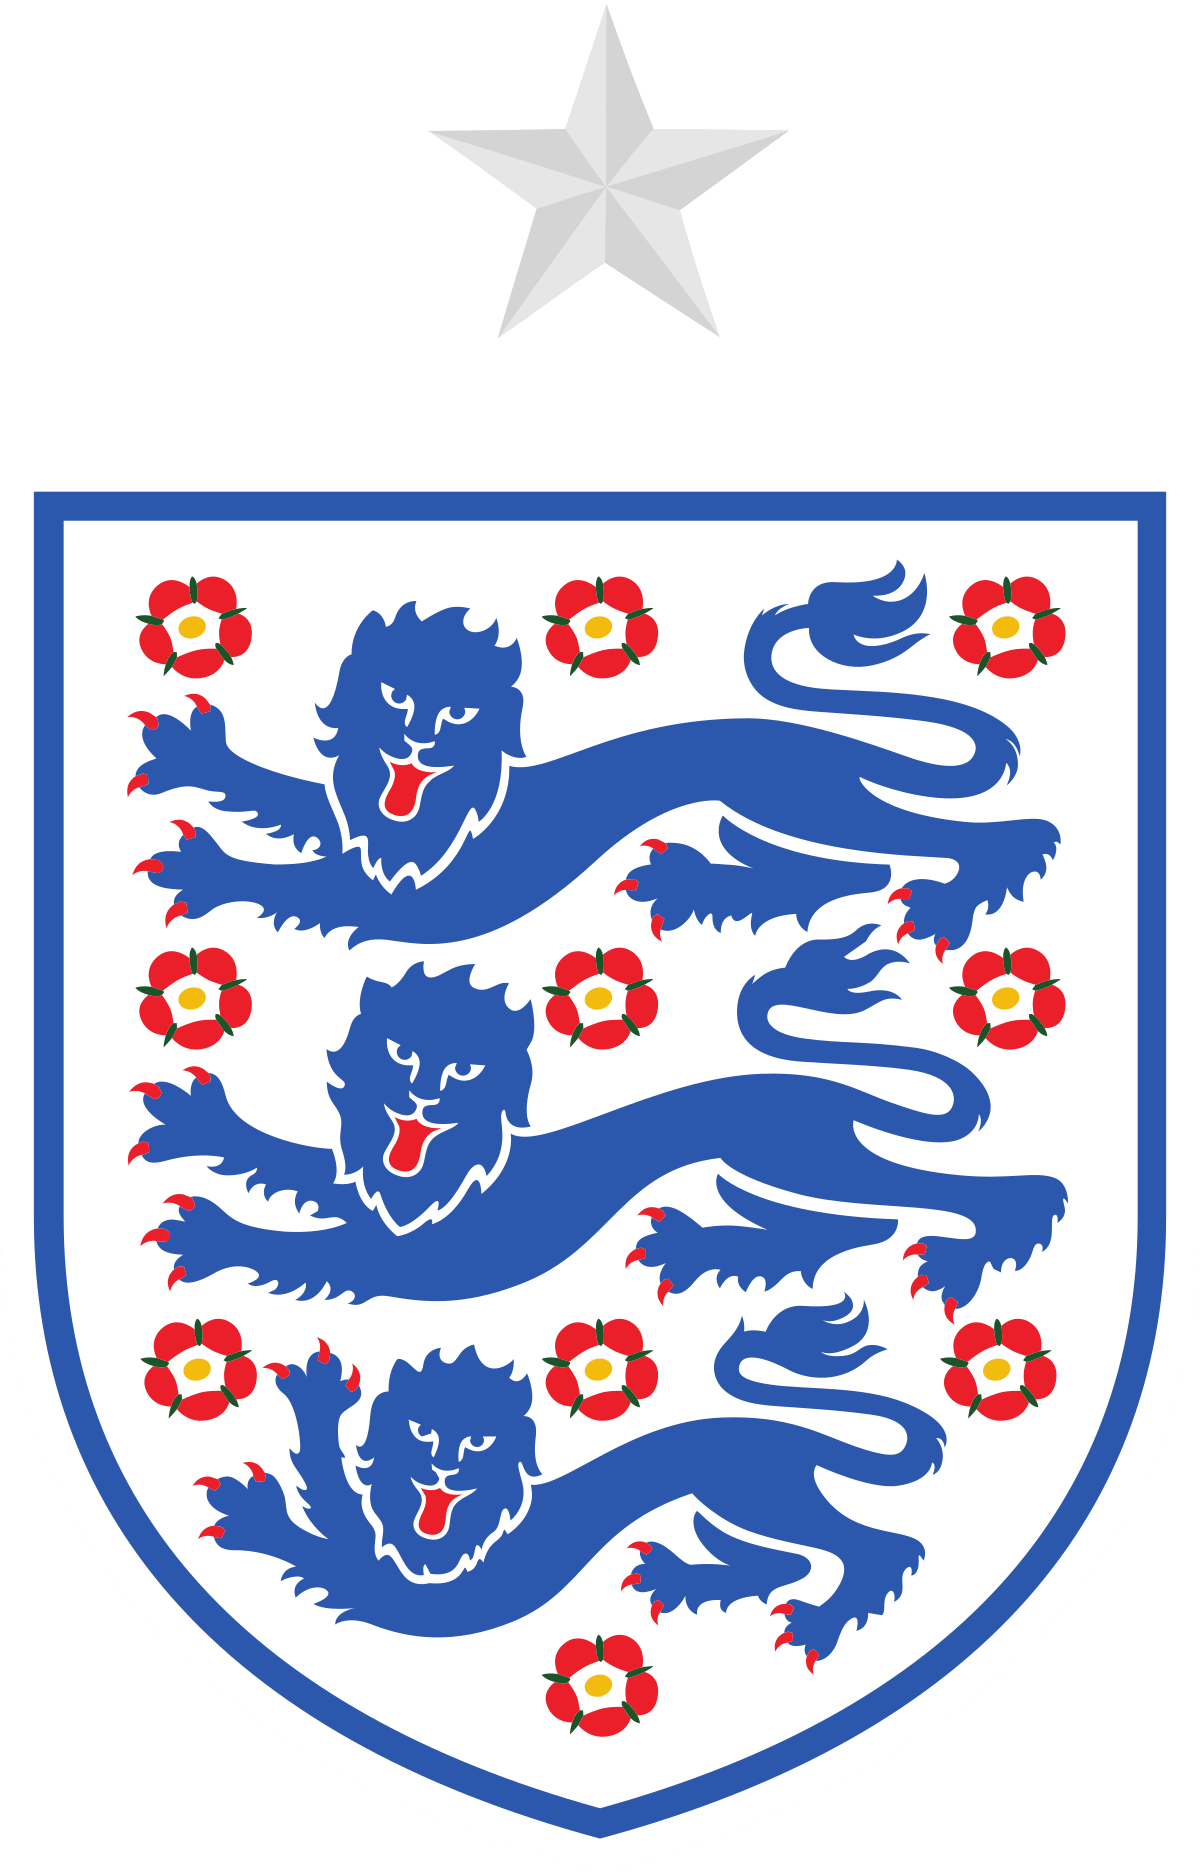 England National Team Crest